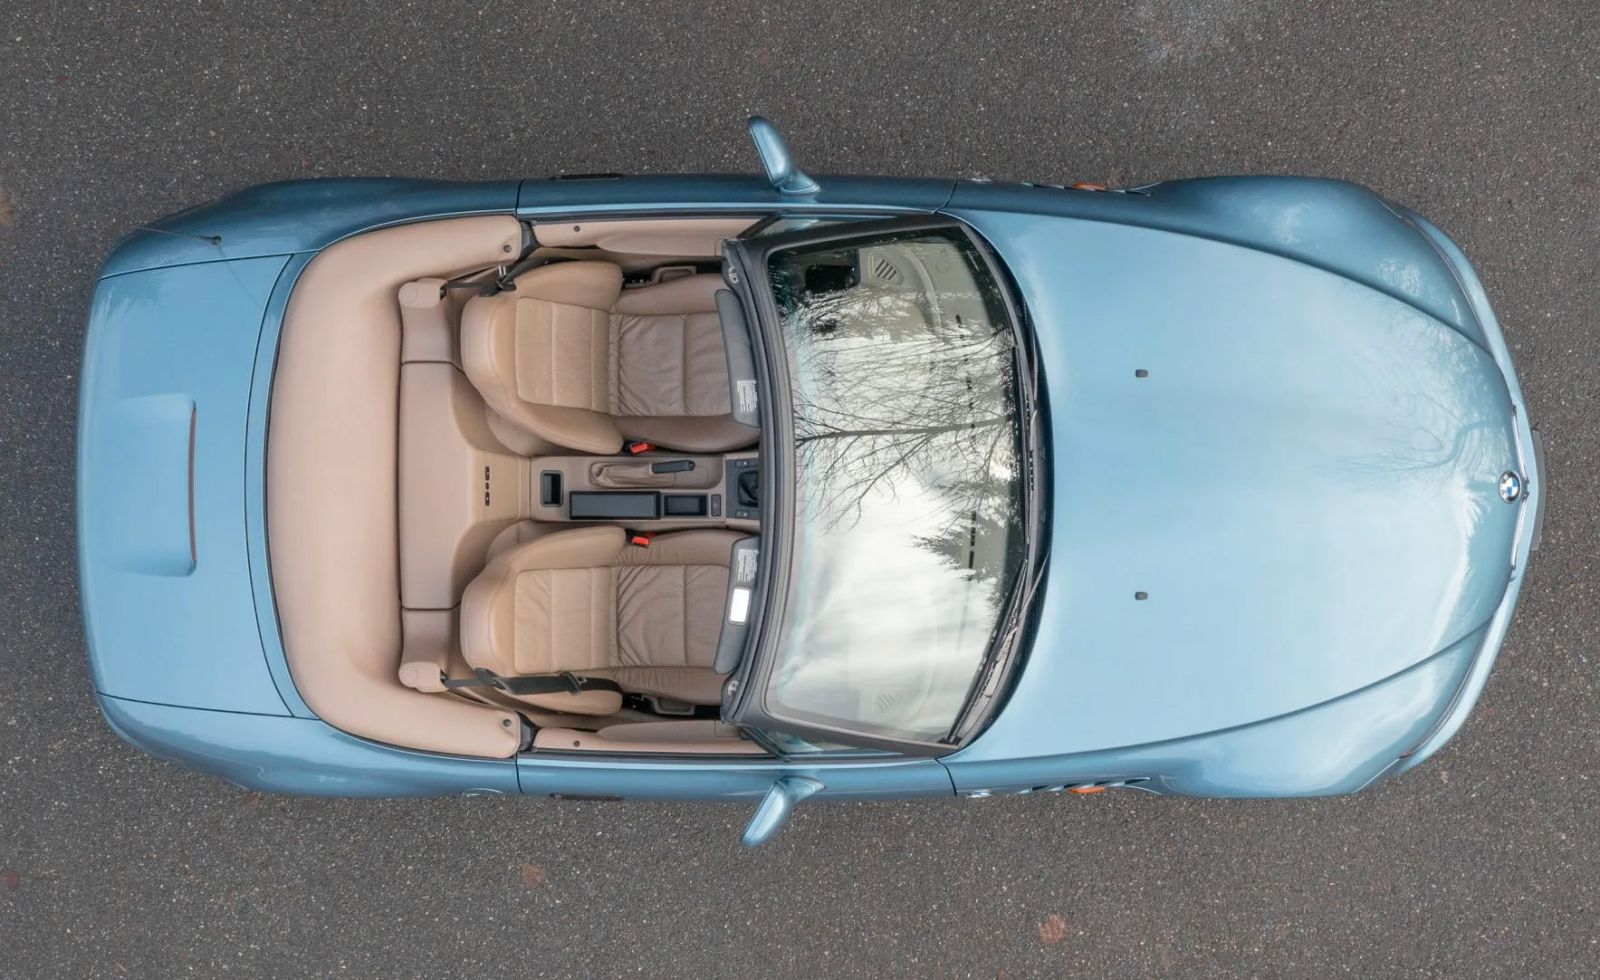 James Bond BMW Z3 For Sale Bring a Trailer top